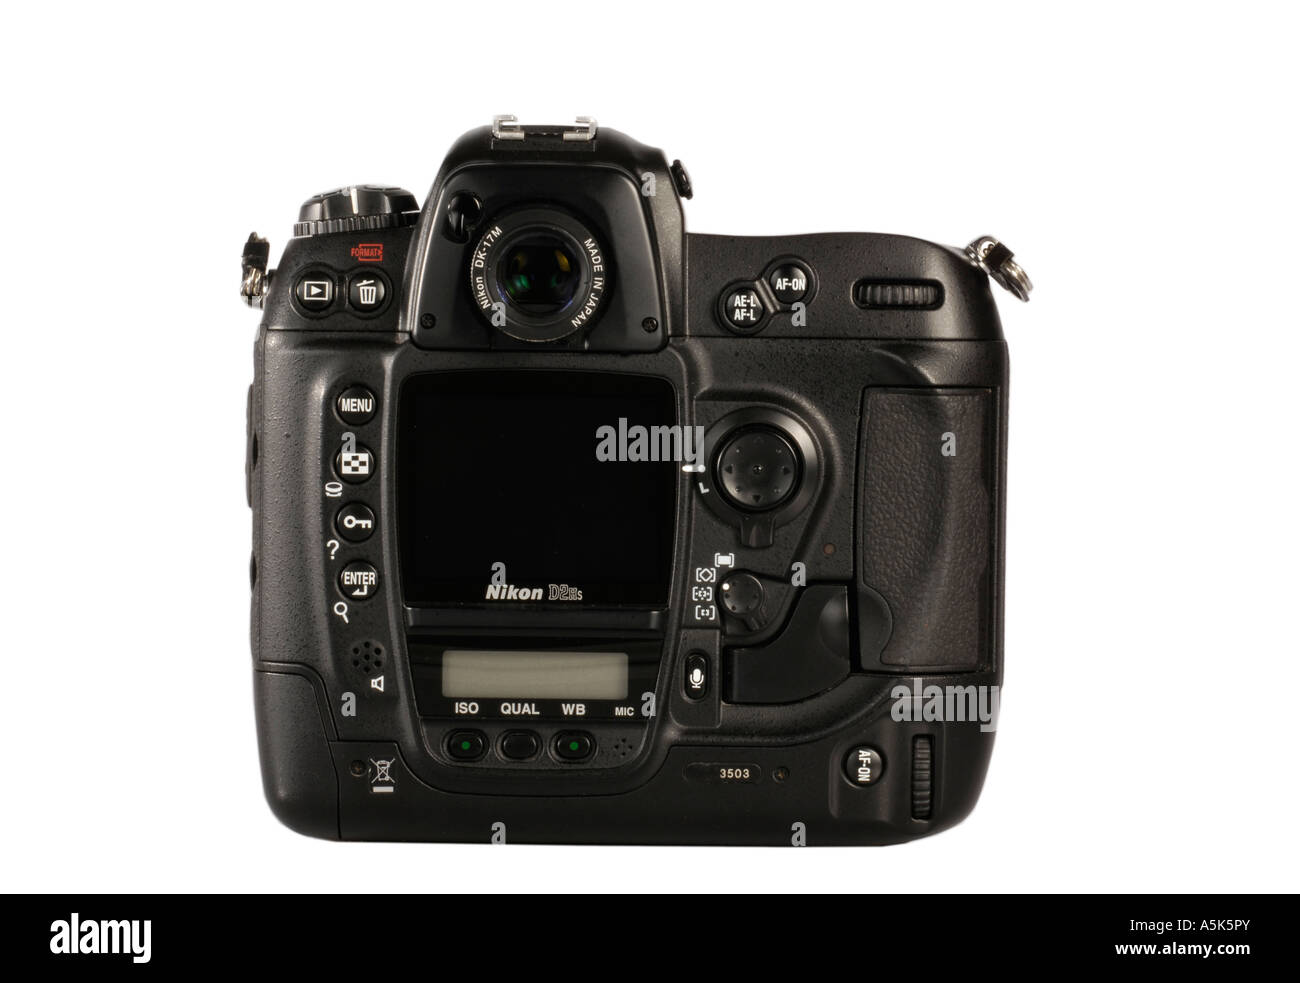 Nikon d camera hi-res stock photography and images - Alamy